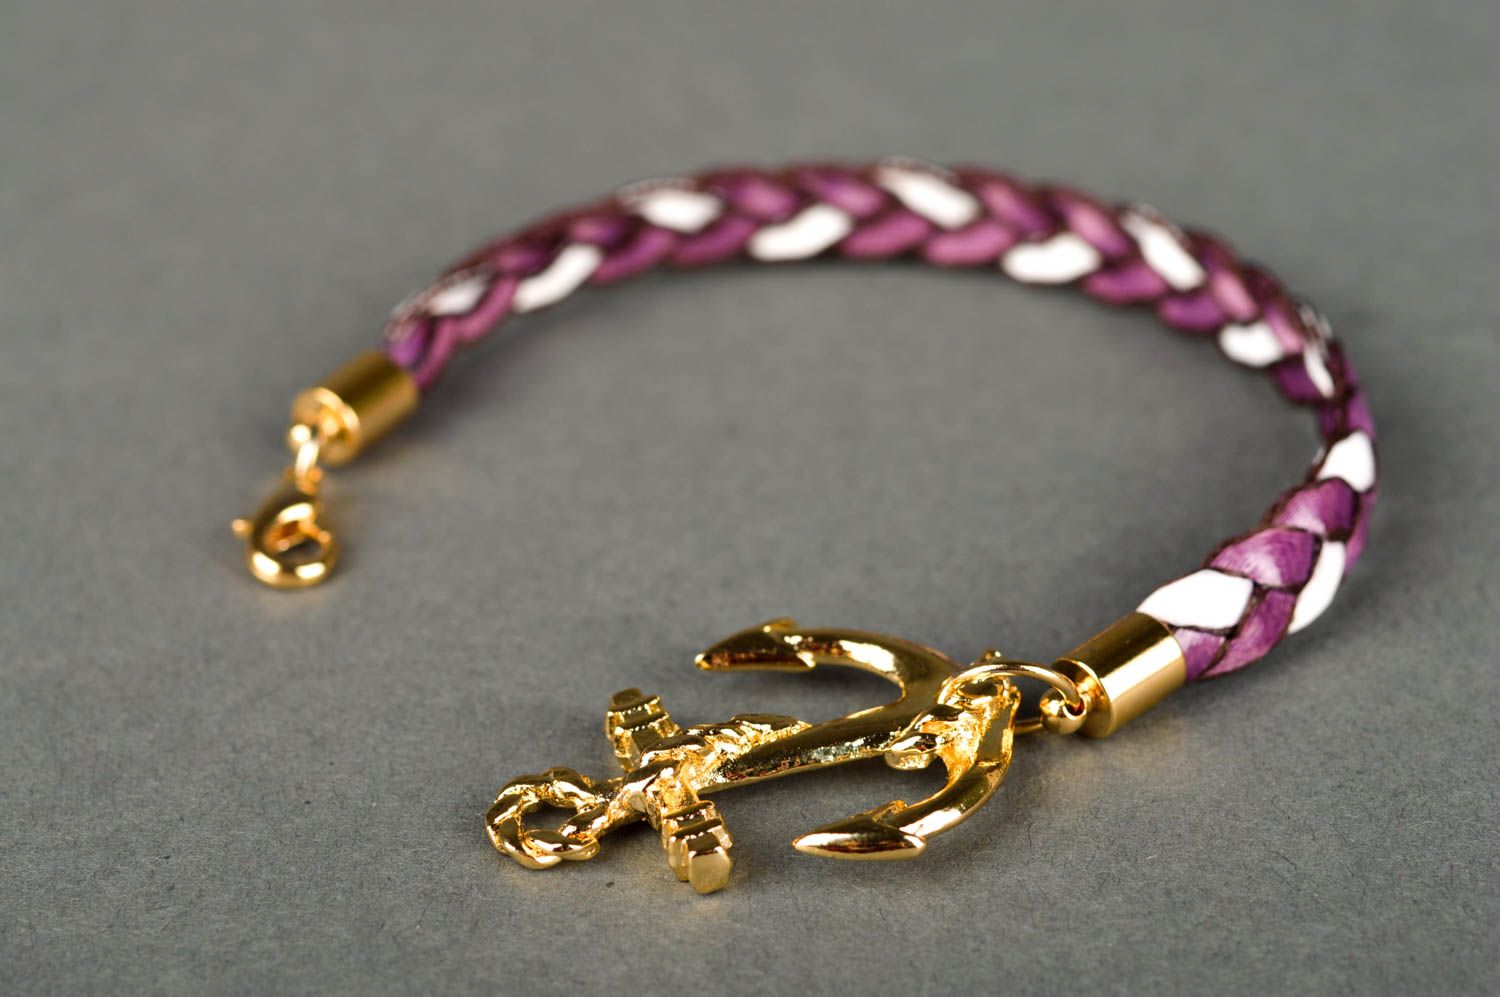 Handmade bracelet designer bracelet fashion accessories for women cool gifts photo 5